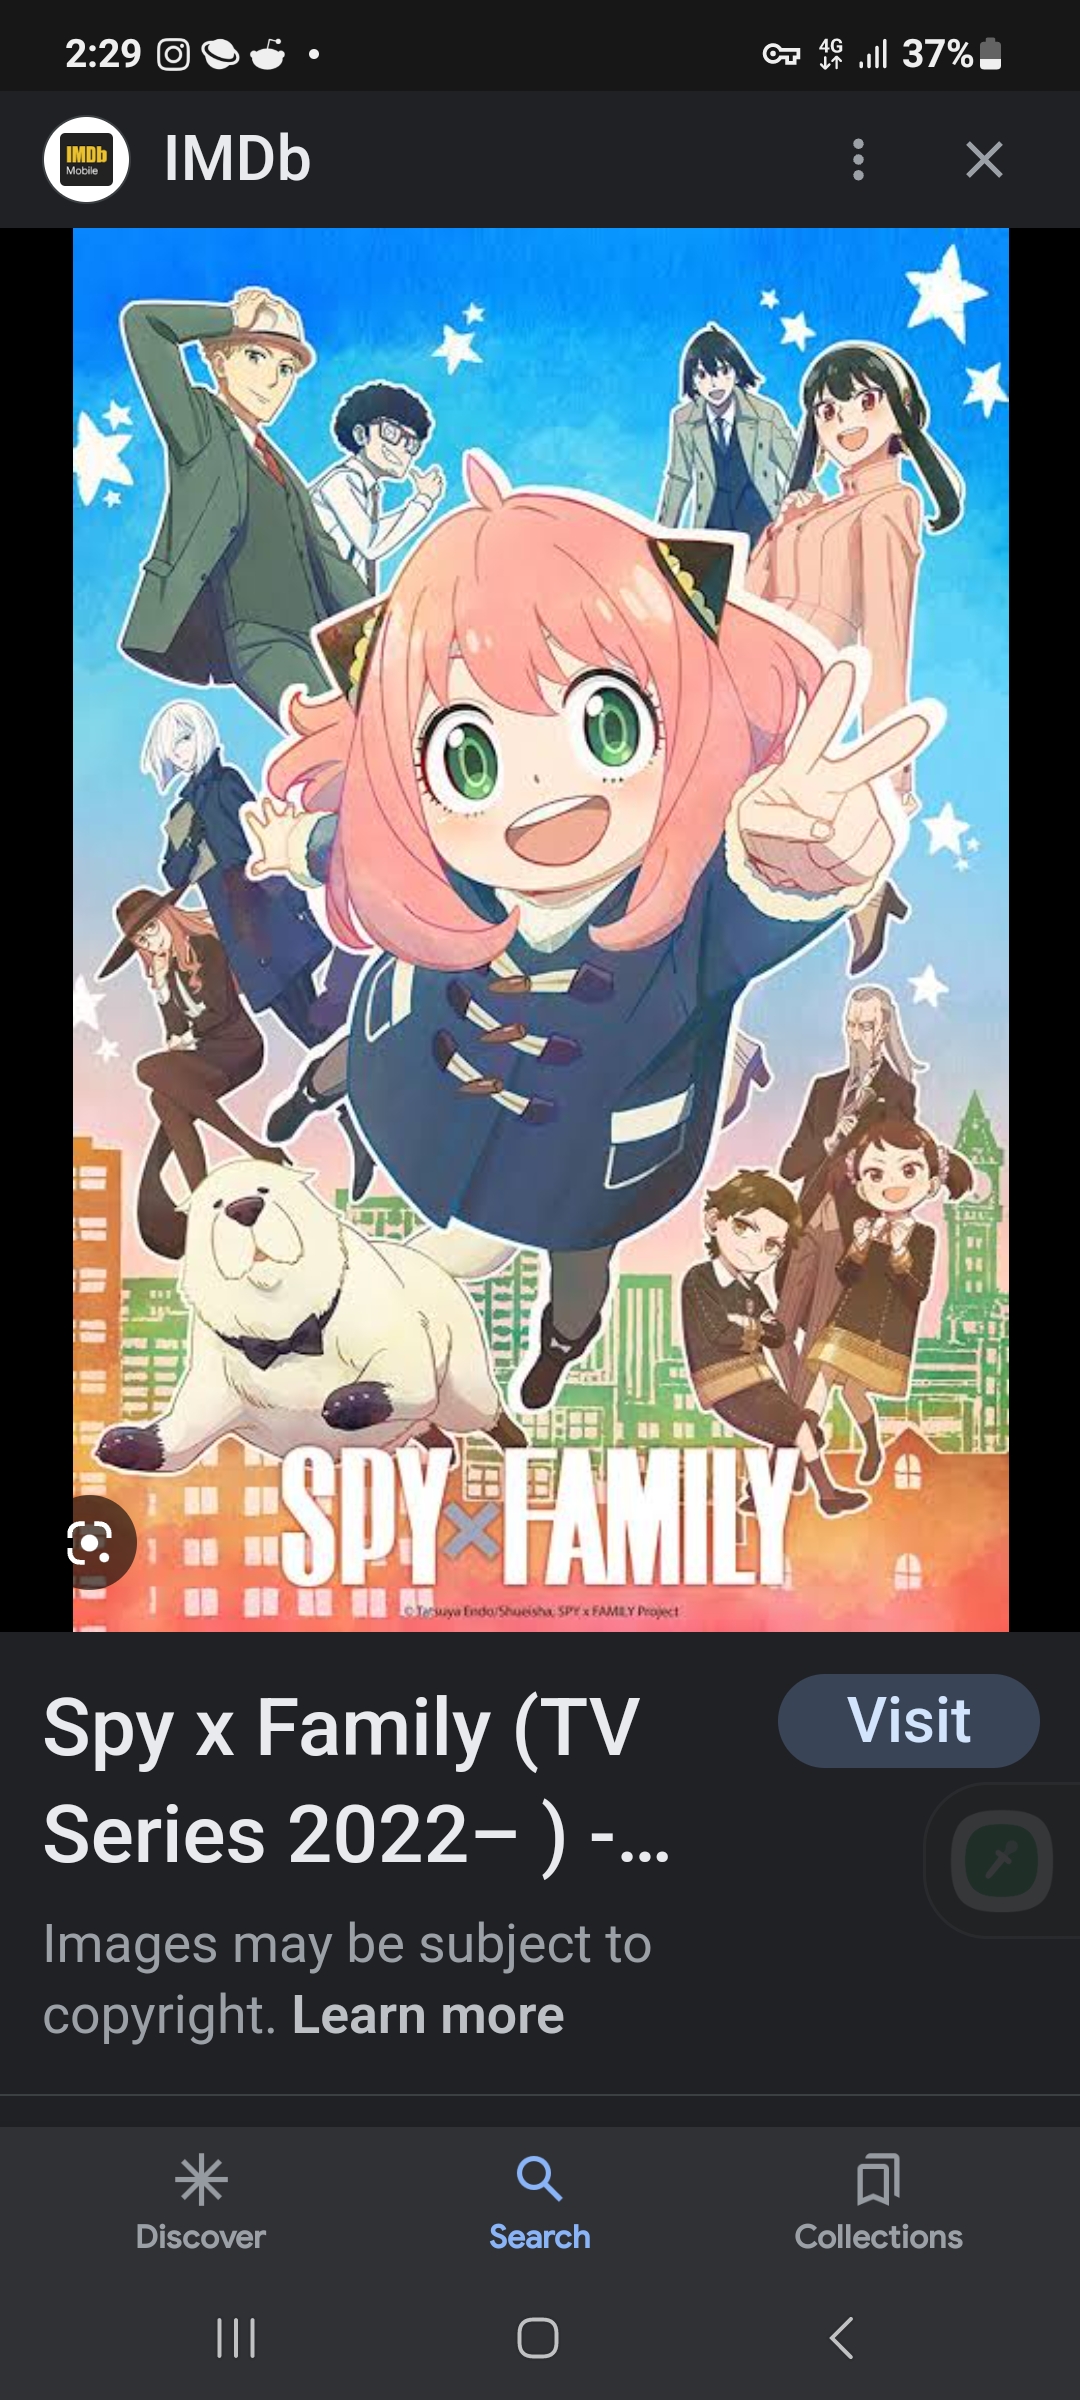 TV Anime Spy x Family 2nd Cour Shinko Music Edition 93% OFF